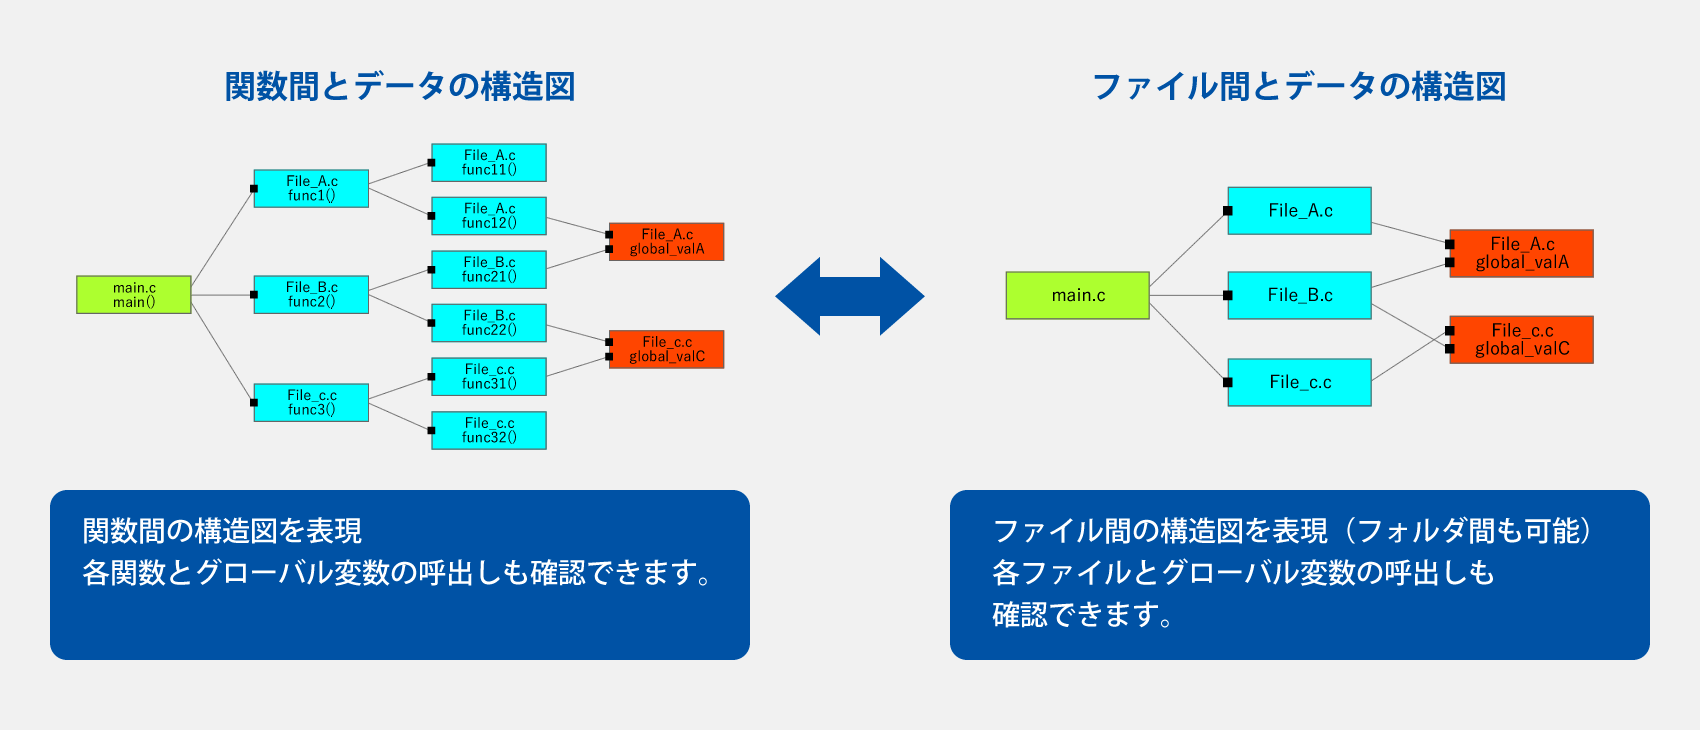 Job's Sonarの画面例:Job's Sonarの構造図表示